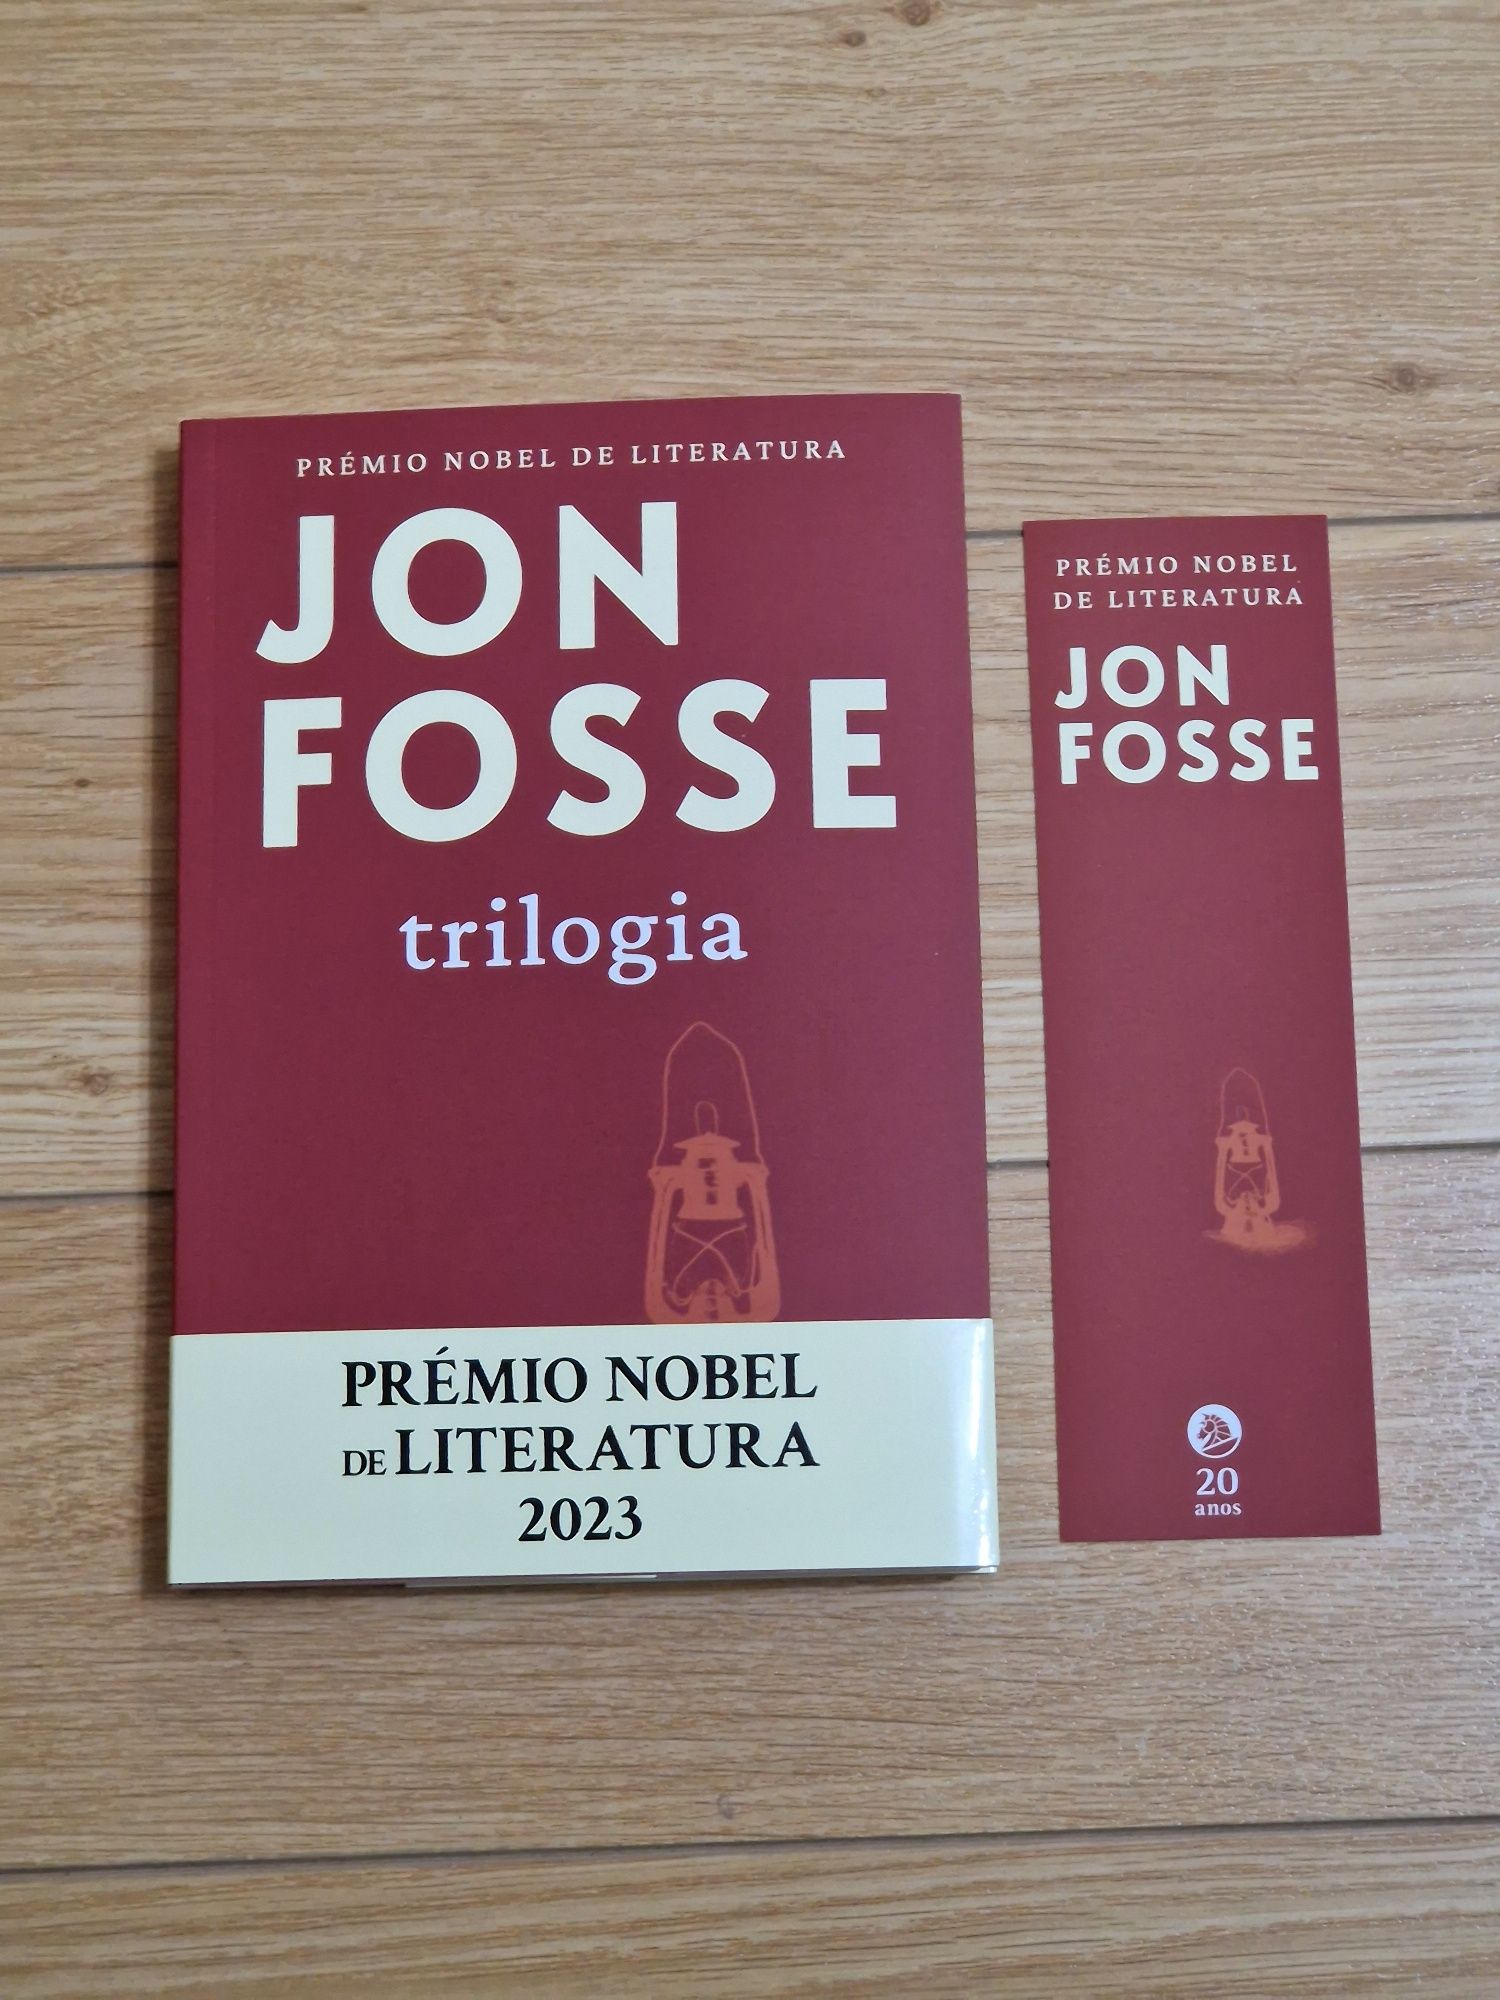 Trilogia (Prémio Nobel de Literatura 2023, de Jon Fosse)